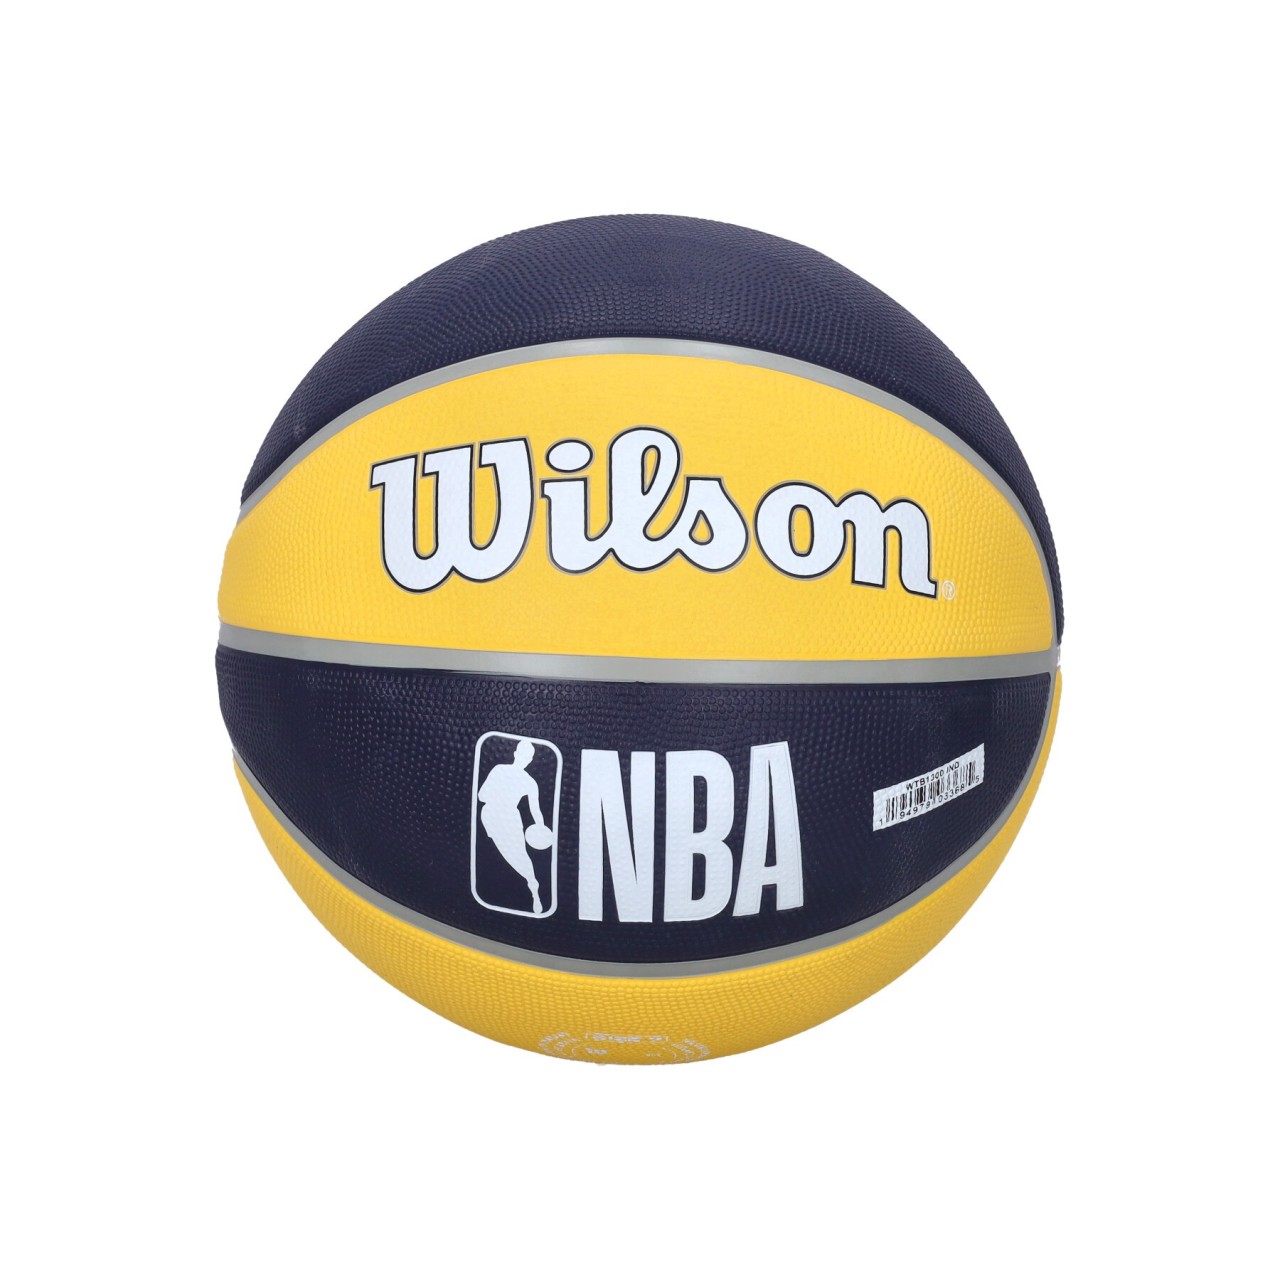 WILSON TEAM NBA TEAM TRIBUTE BASKETBALL SIZE 7 INDPAC WTB1300XBIND